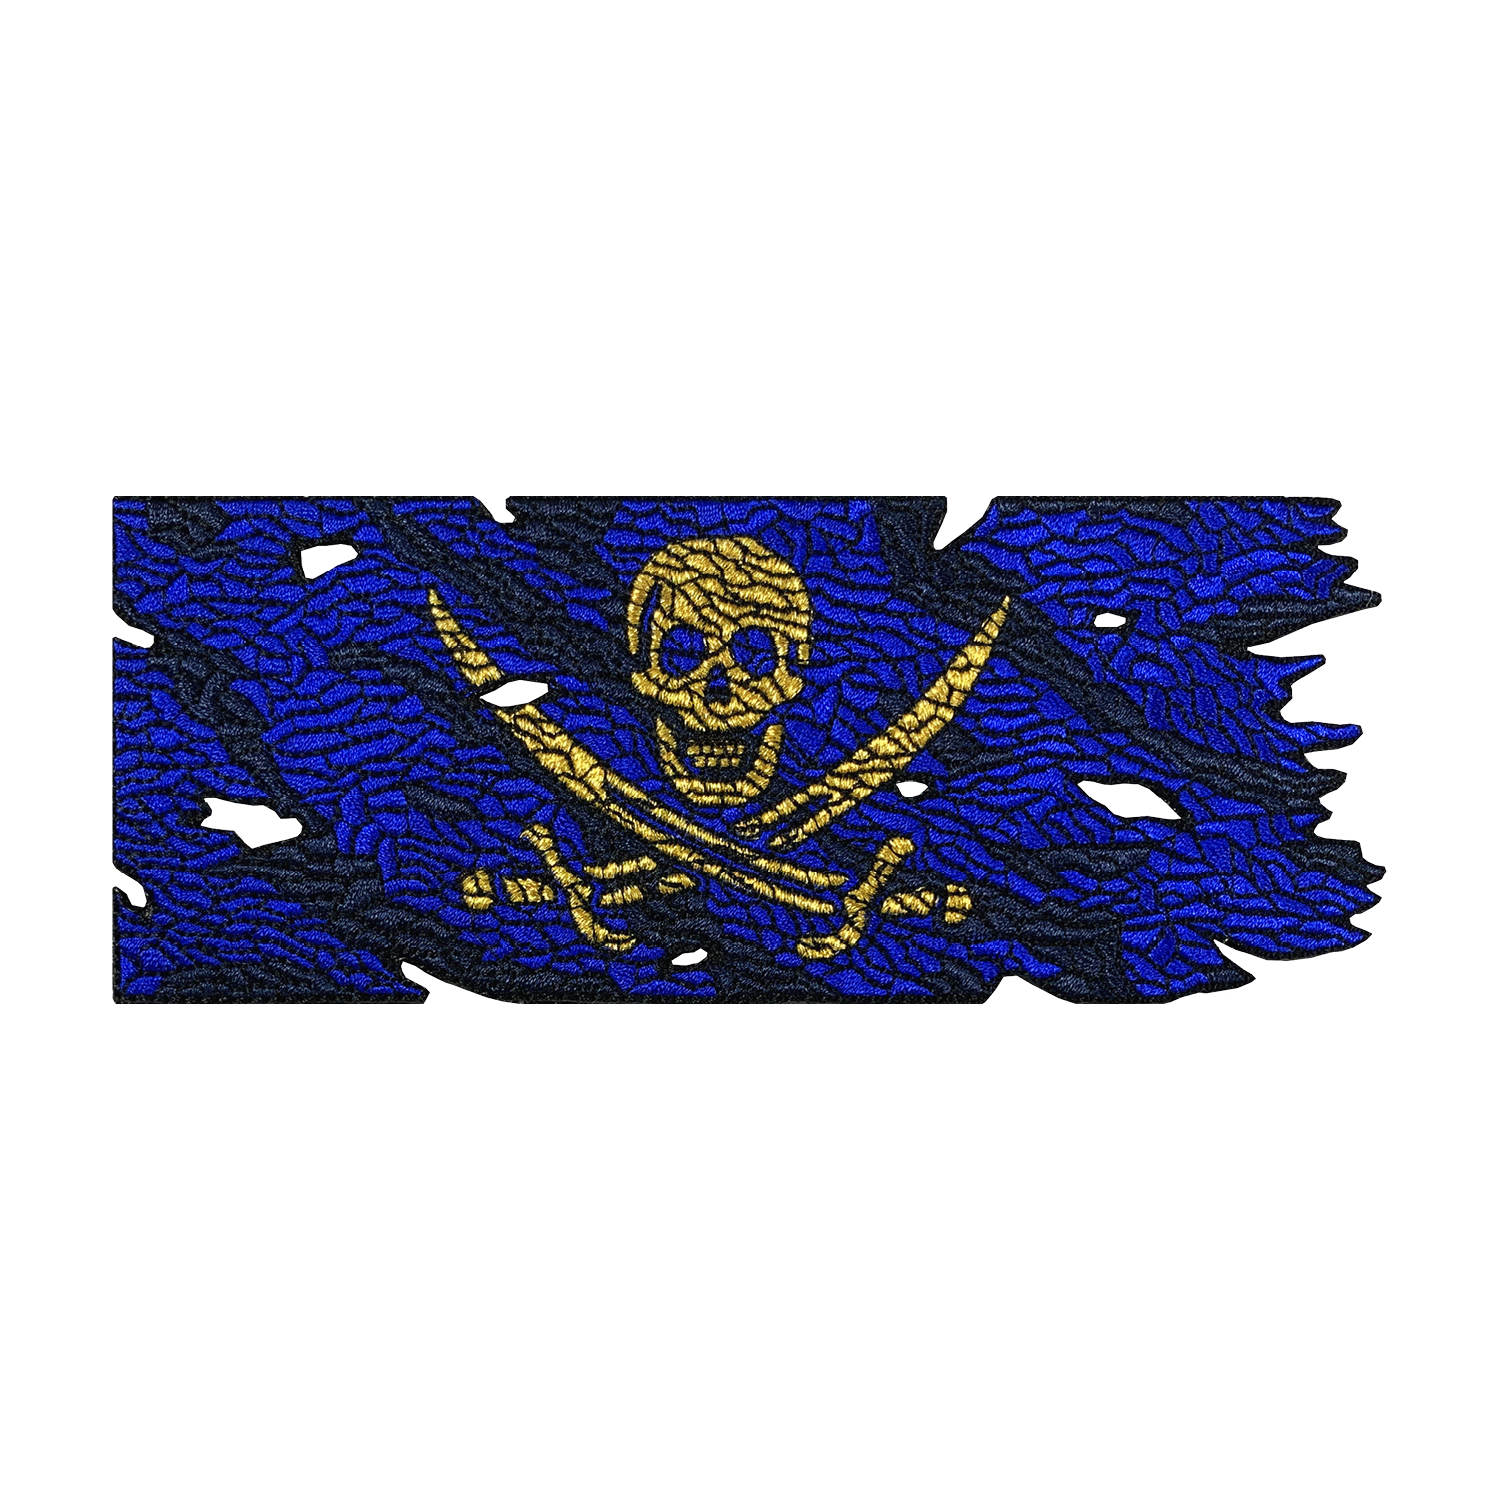 Pirate Flag v1.5 - Blue Jack Patch - GZila Designs